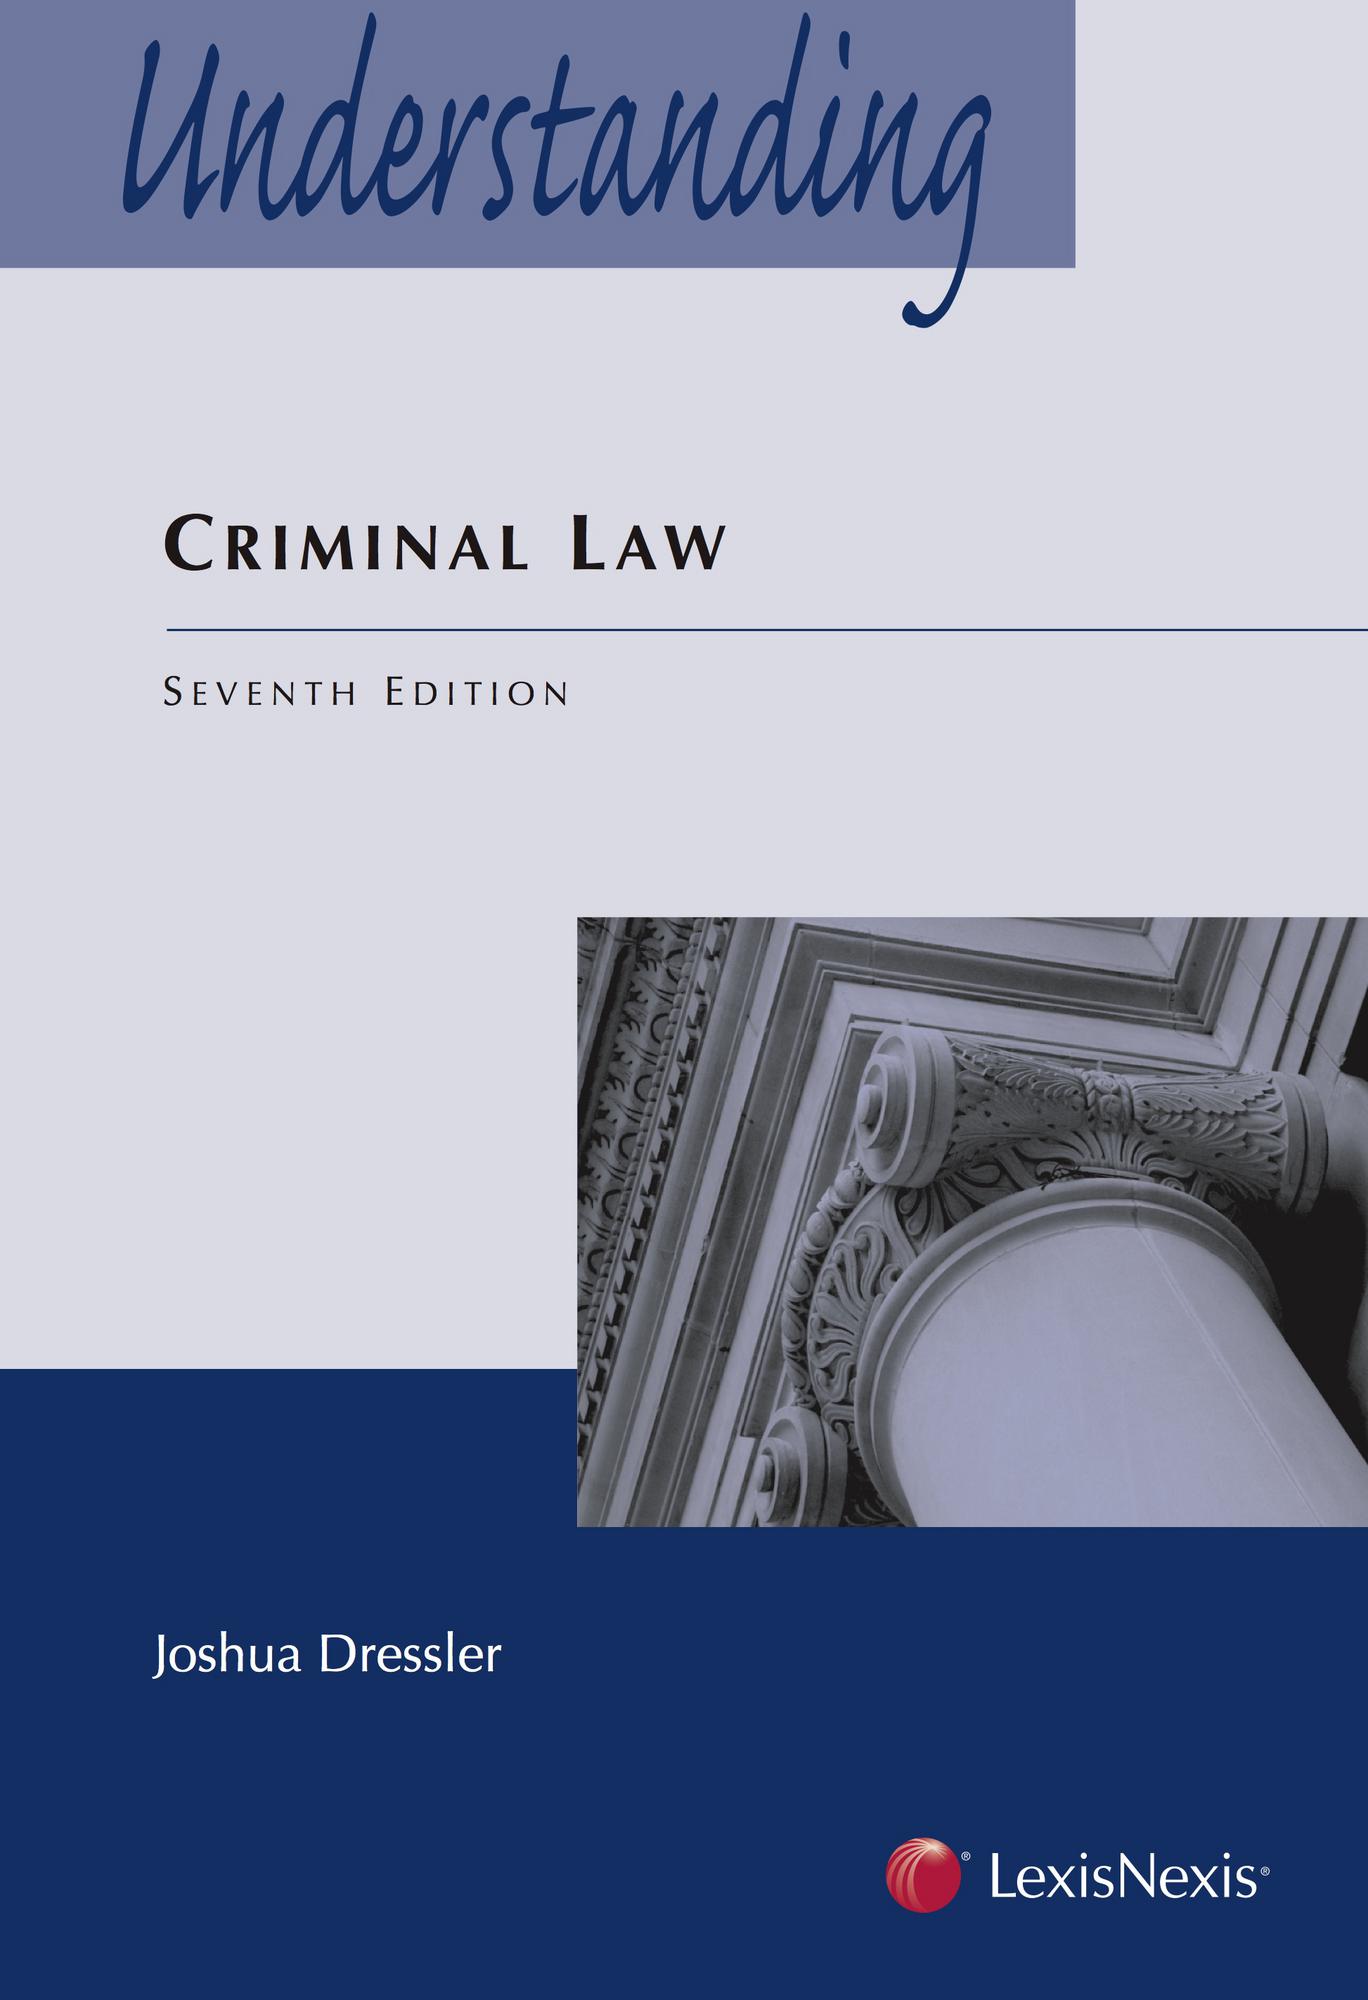 Understanding Criminal Law by: Joshua Dressler - 9781632838650